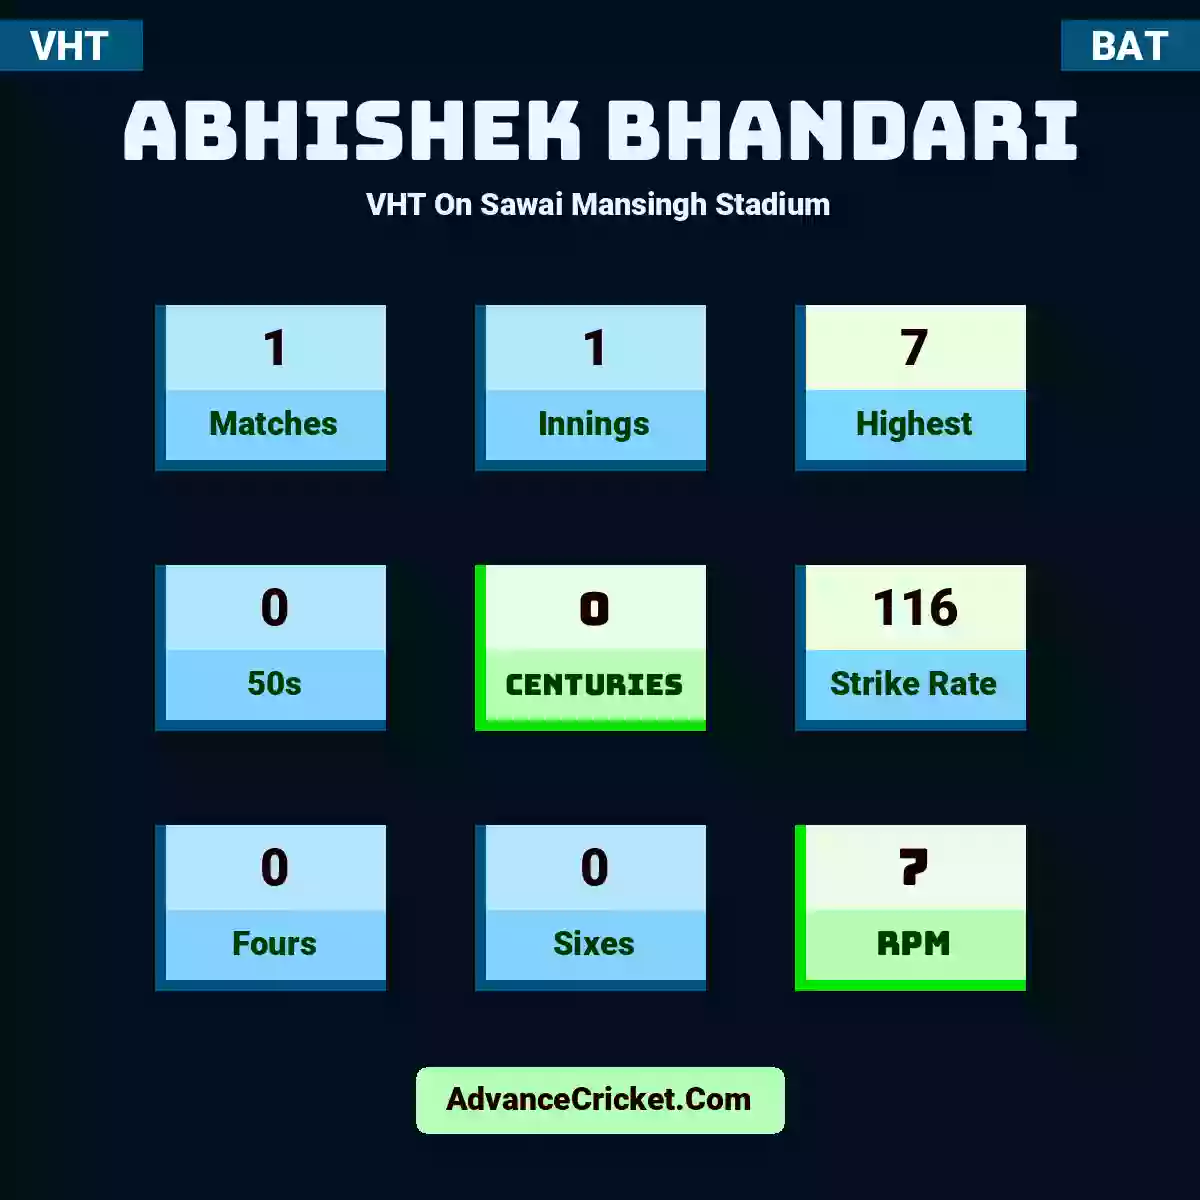 Abhishek Bhandari VHT  On Sawai Mansingh Stadium, Abhishek Bhandari played 1 matches, scored 7 runs as highest, 0 half-centuries, and 0 centuries, with a strike rate of 116. A.Bhandari hit 0 fours and 0 sixes, with an RPM of 7.